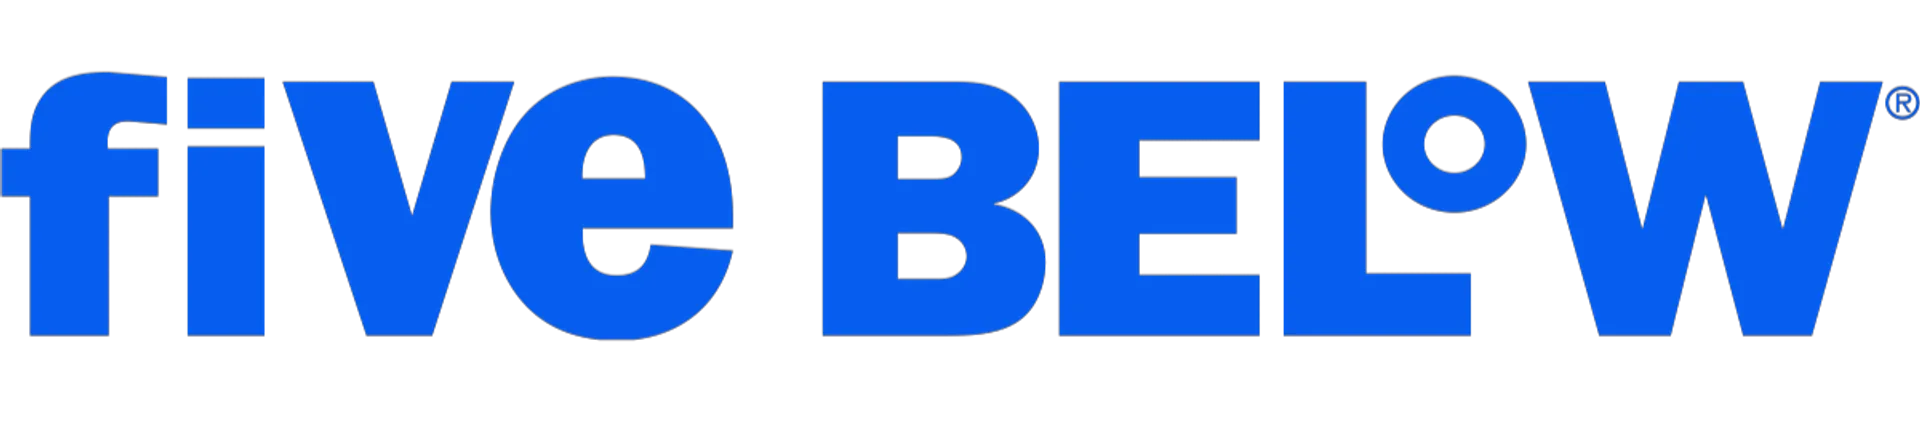 FIVE BELOW logo